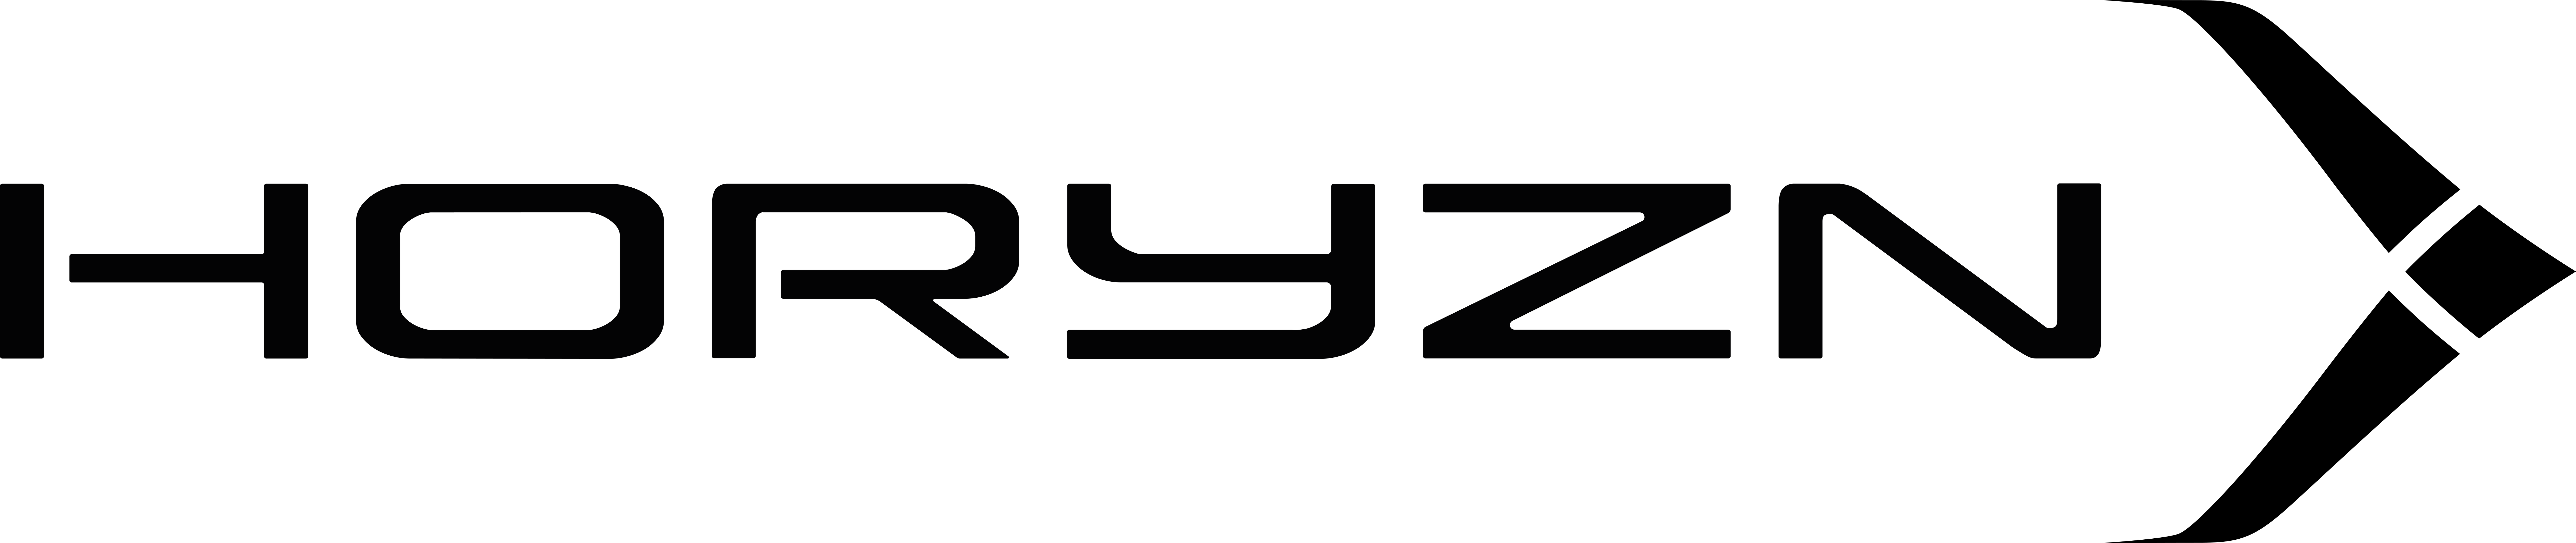 HORZYN logo > Dassault Systèmes